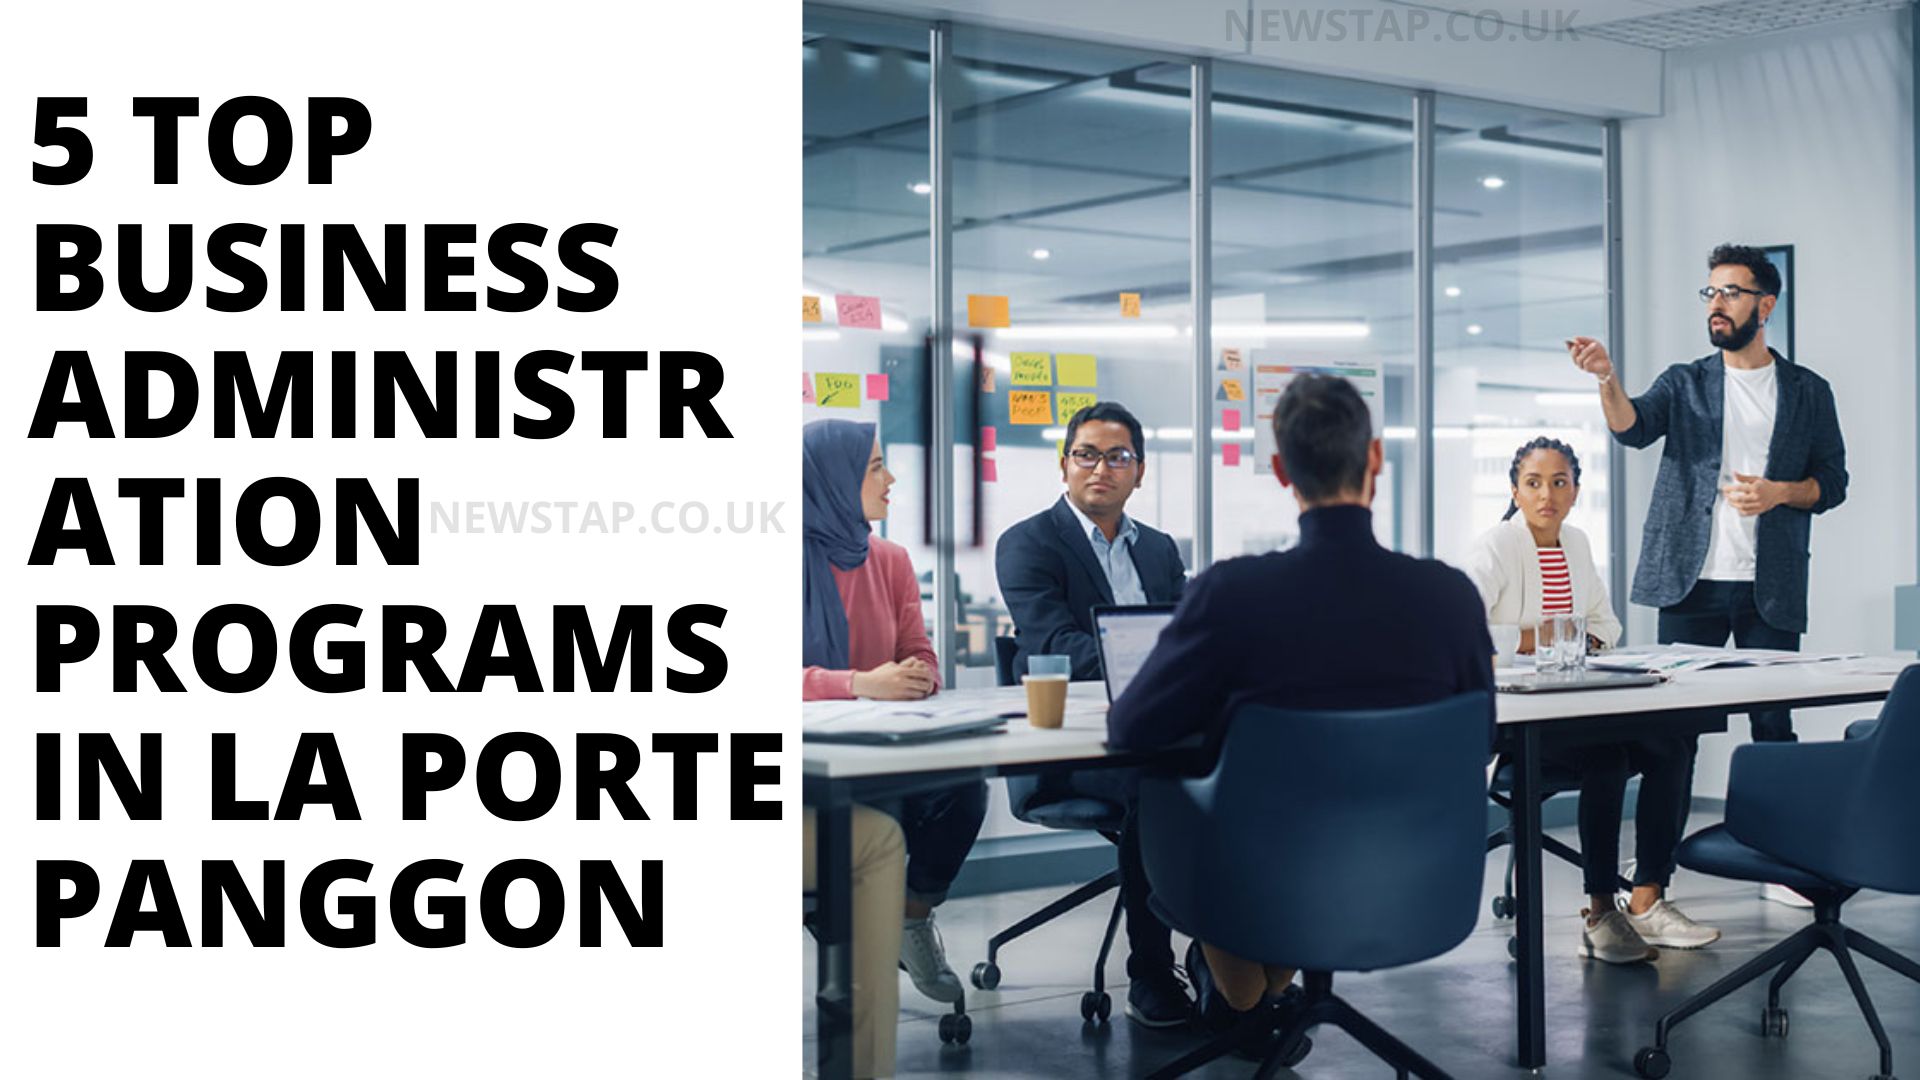 5 Top Business Administration Programs in La Porte Panggon - newstap.co.uk